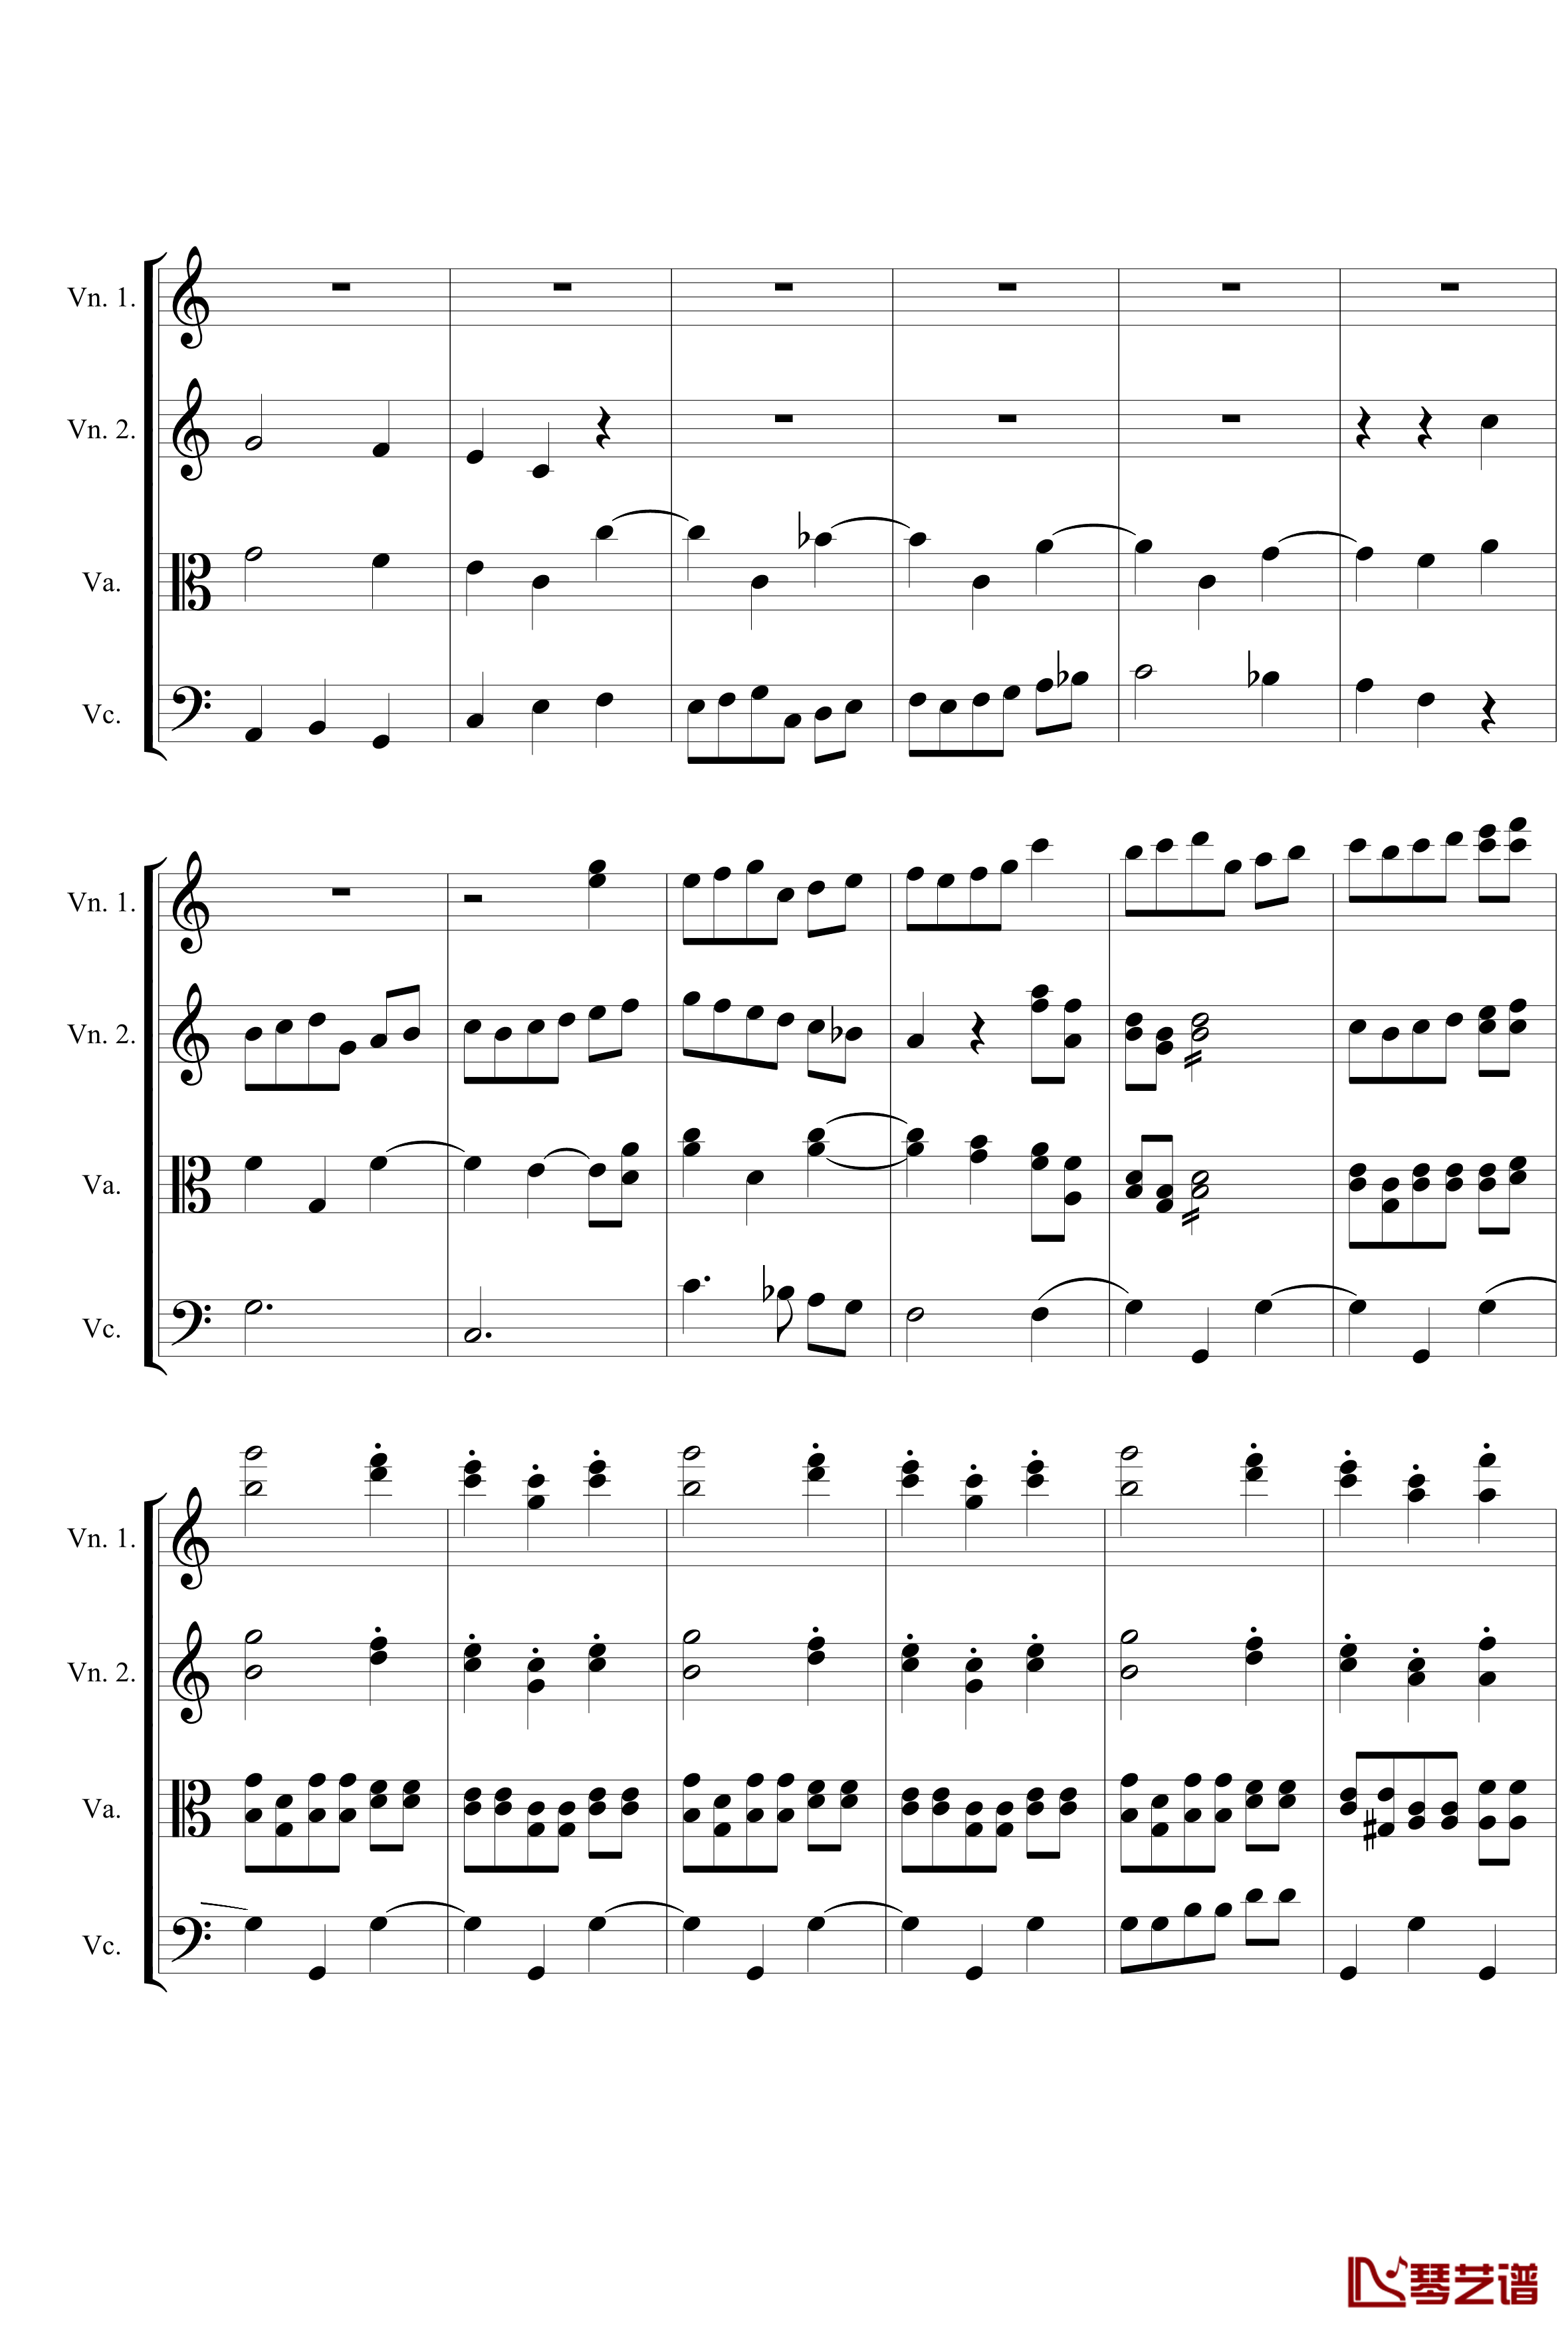 Symphony No.5 in C Minor 3rd钢琴谱-String quartet-贝多芬-beethoven13